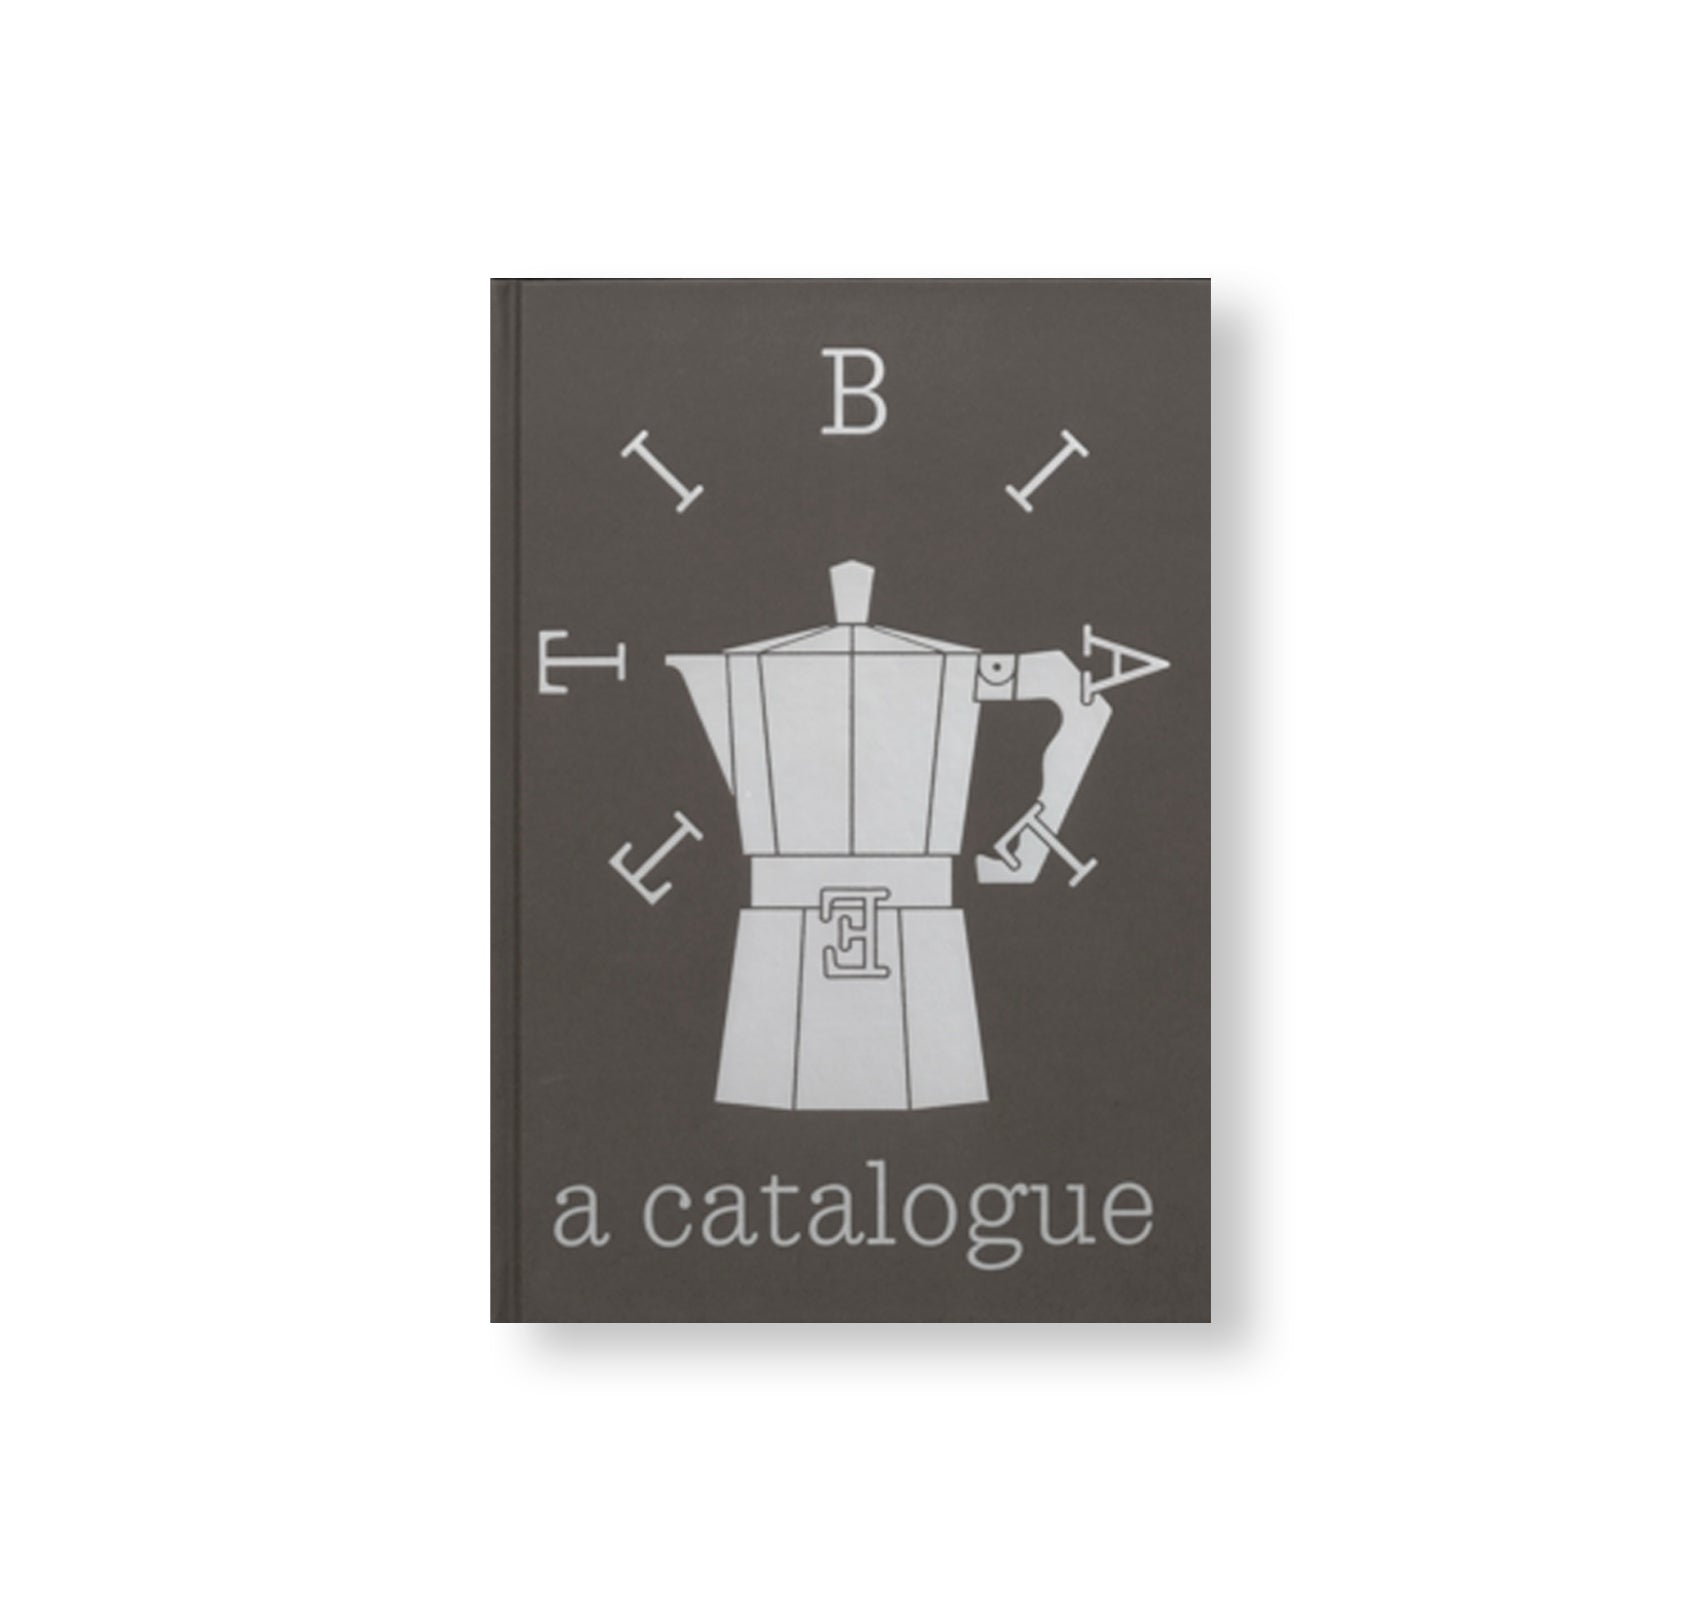 BIALETTI: A CATALOGUE by David Bergé